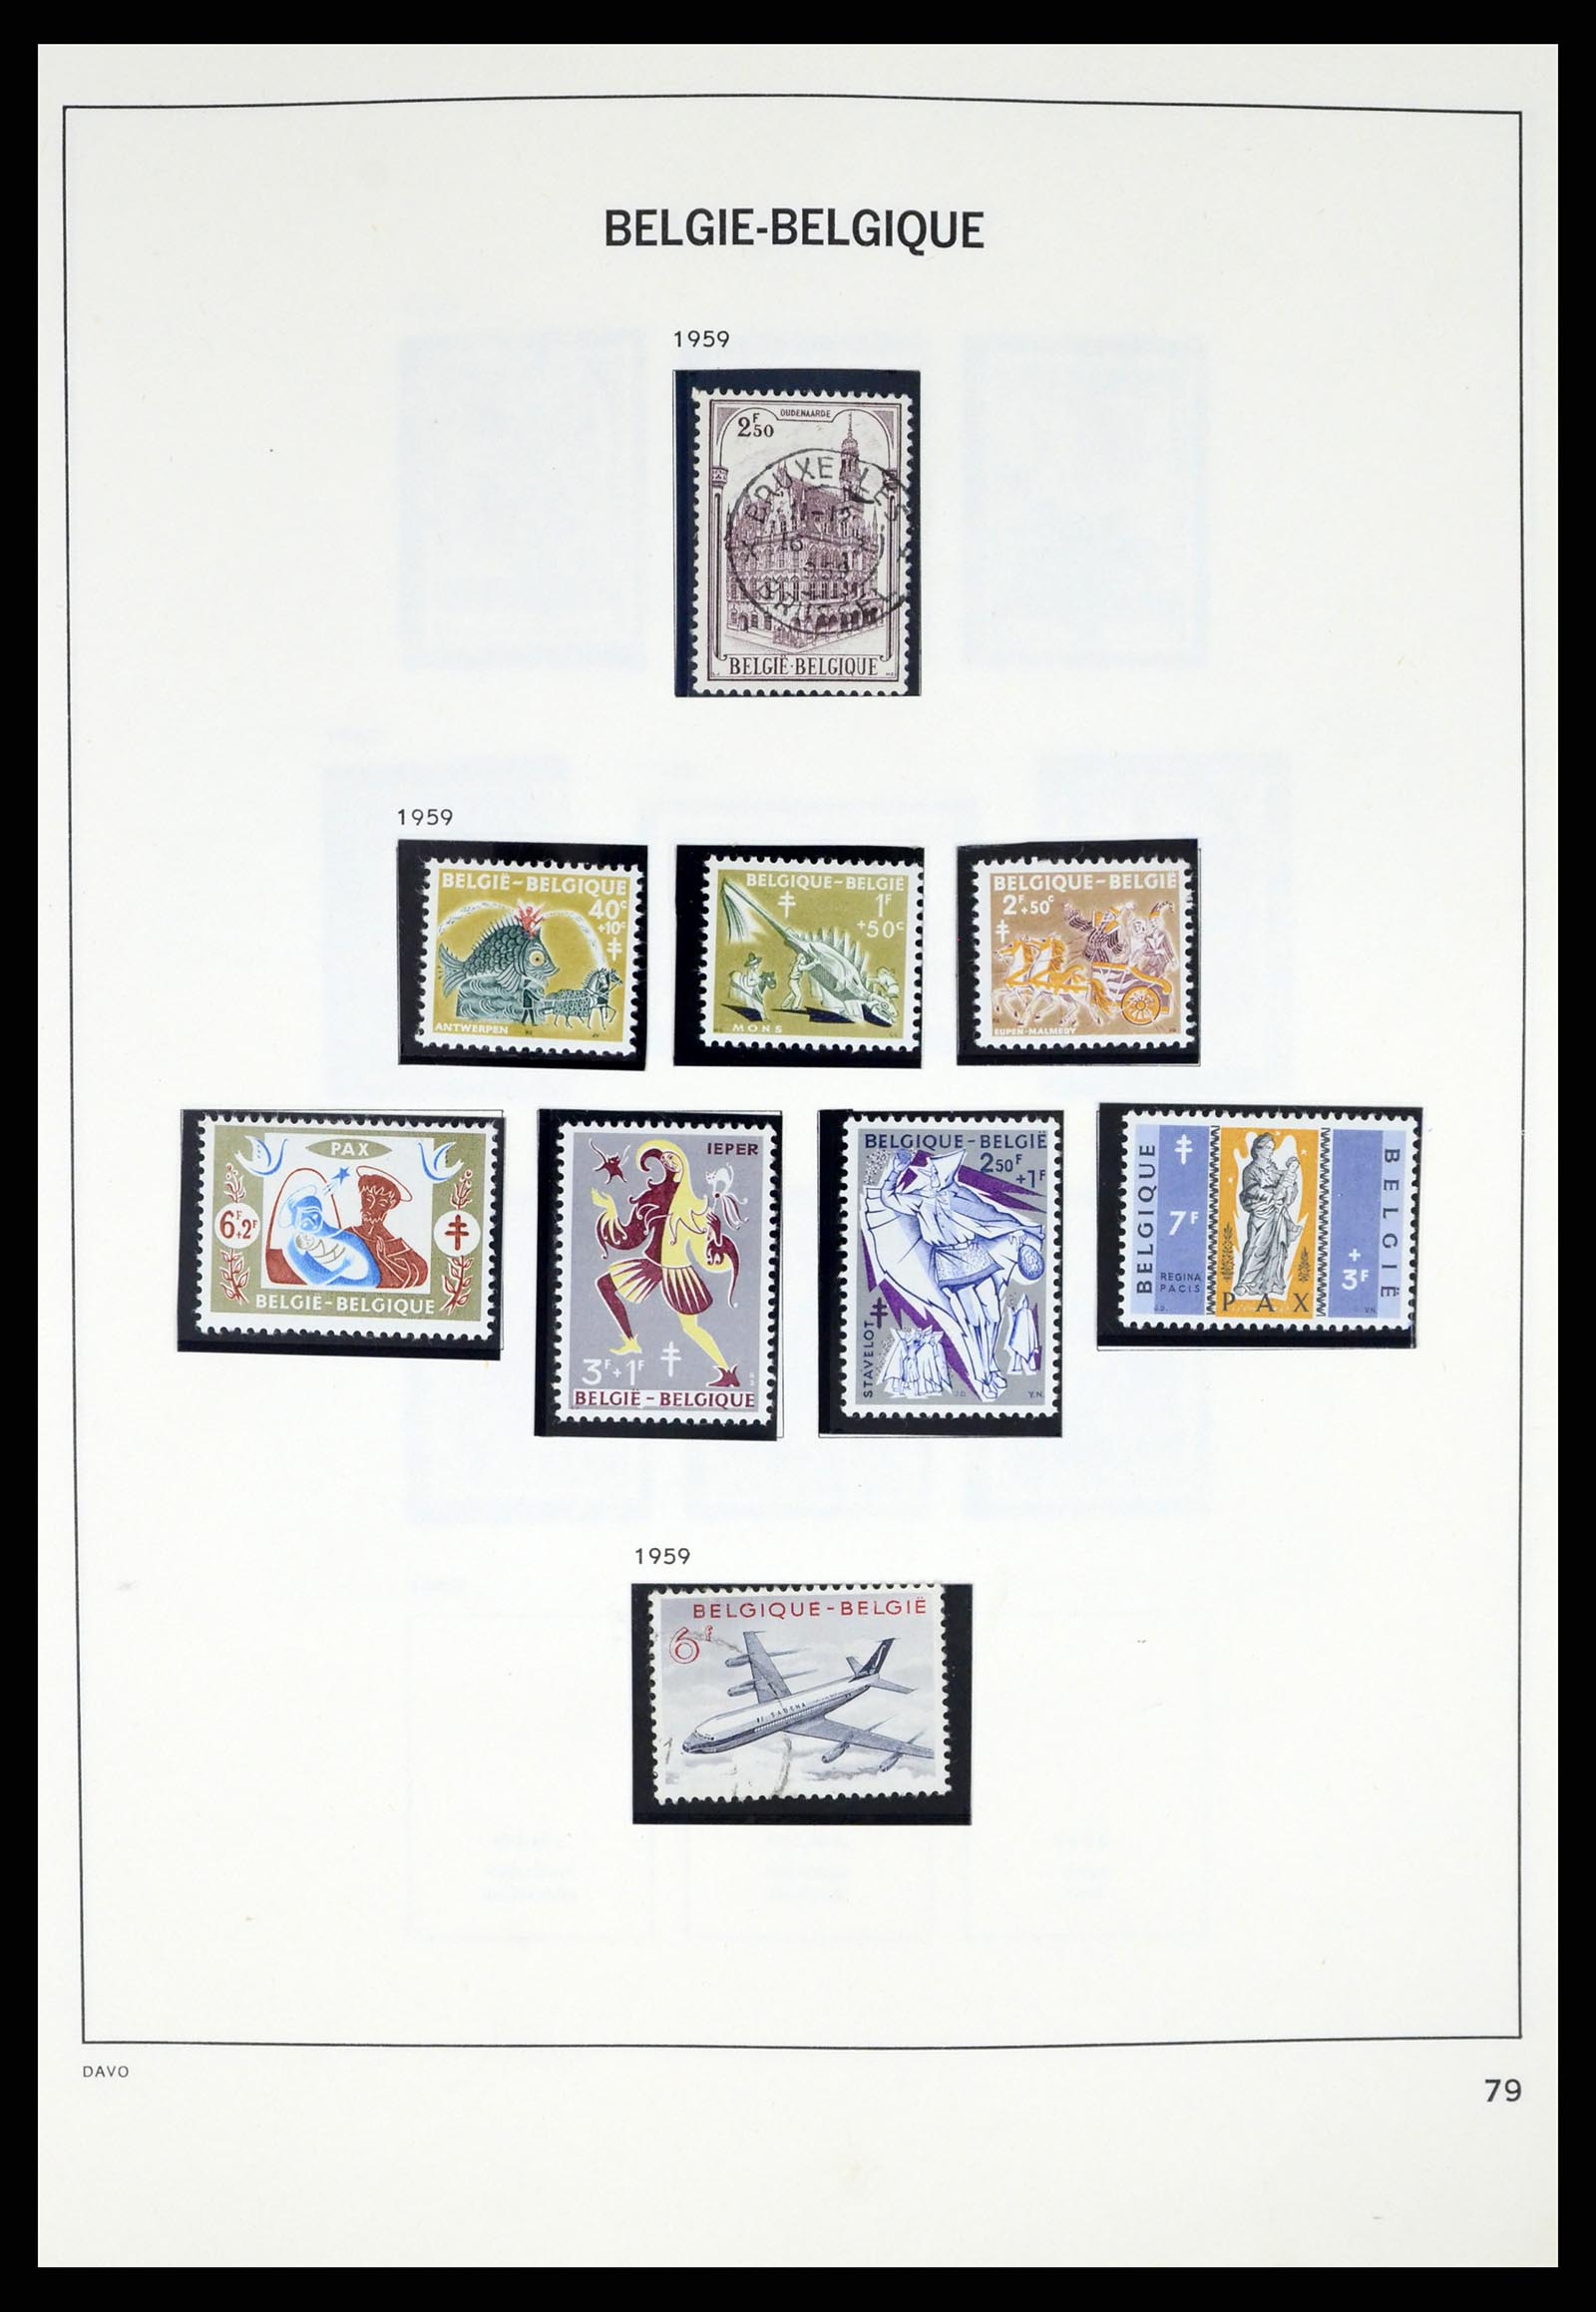 37367 075 - Stamp collection 37367 Belgium 1849-2003.